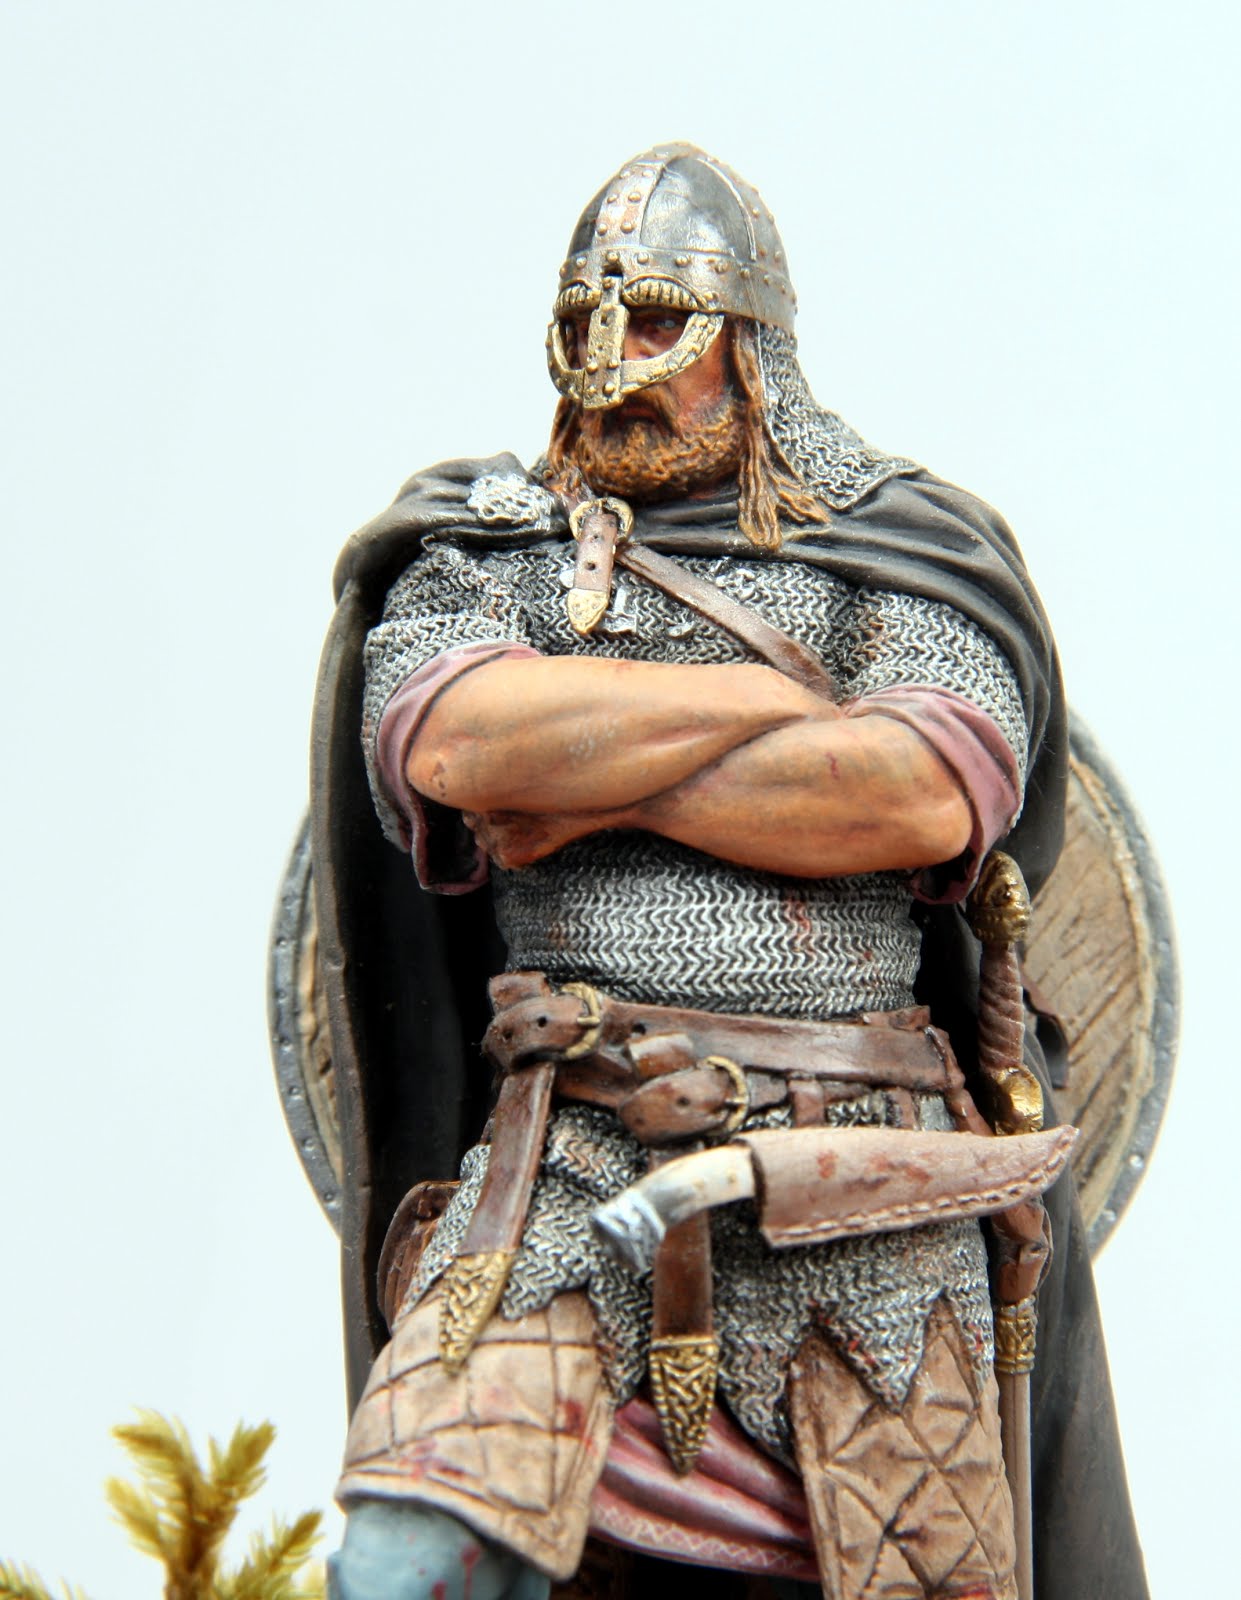 Historical Miniatures by Calin Ungureanu: Viking raider